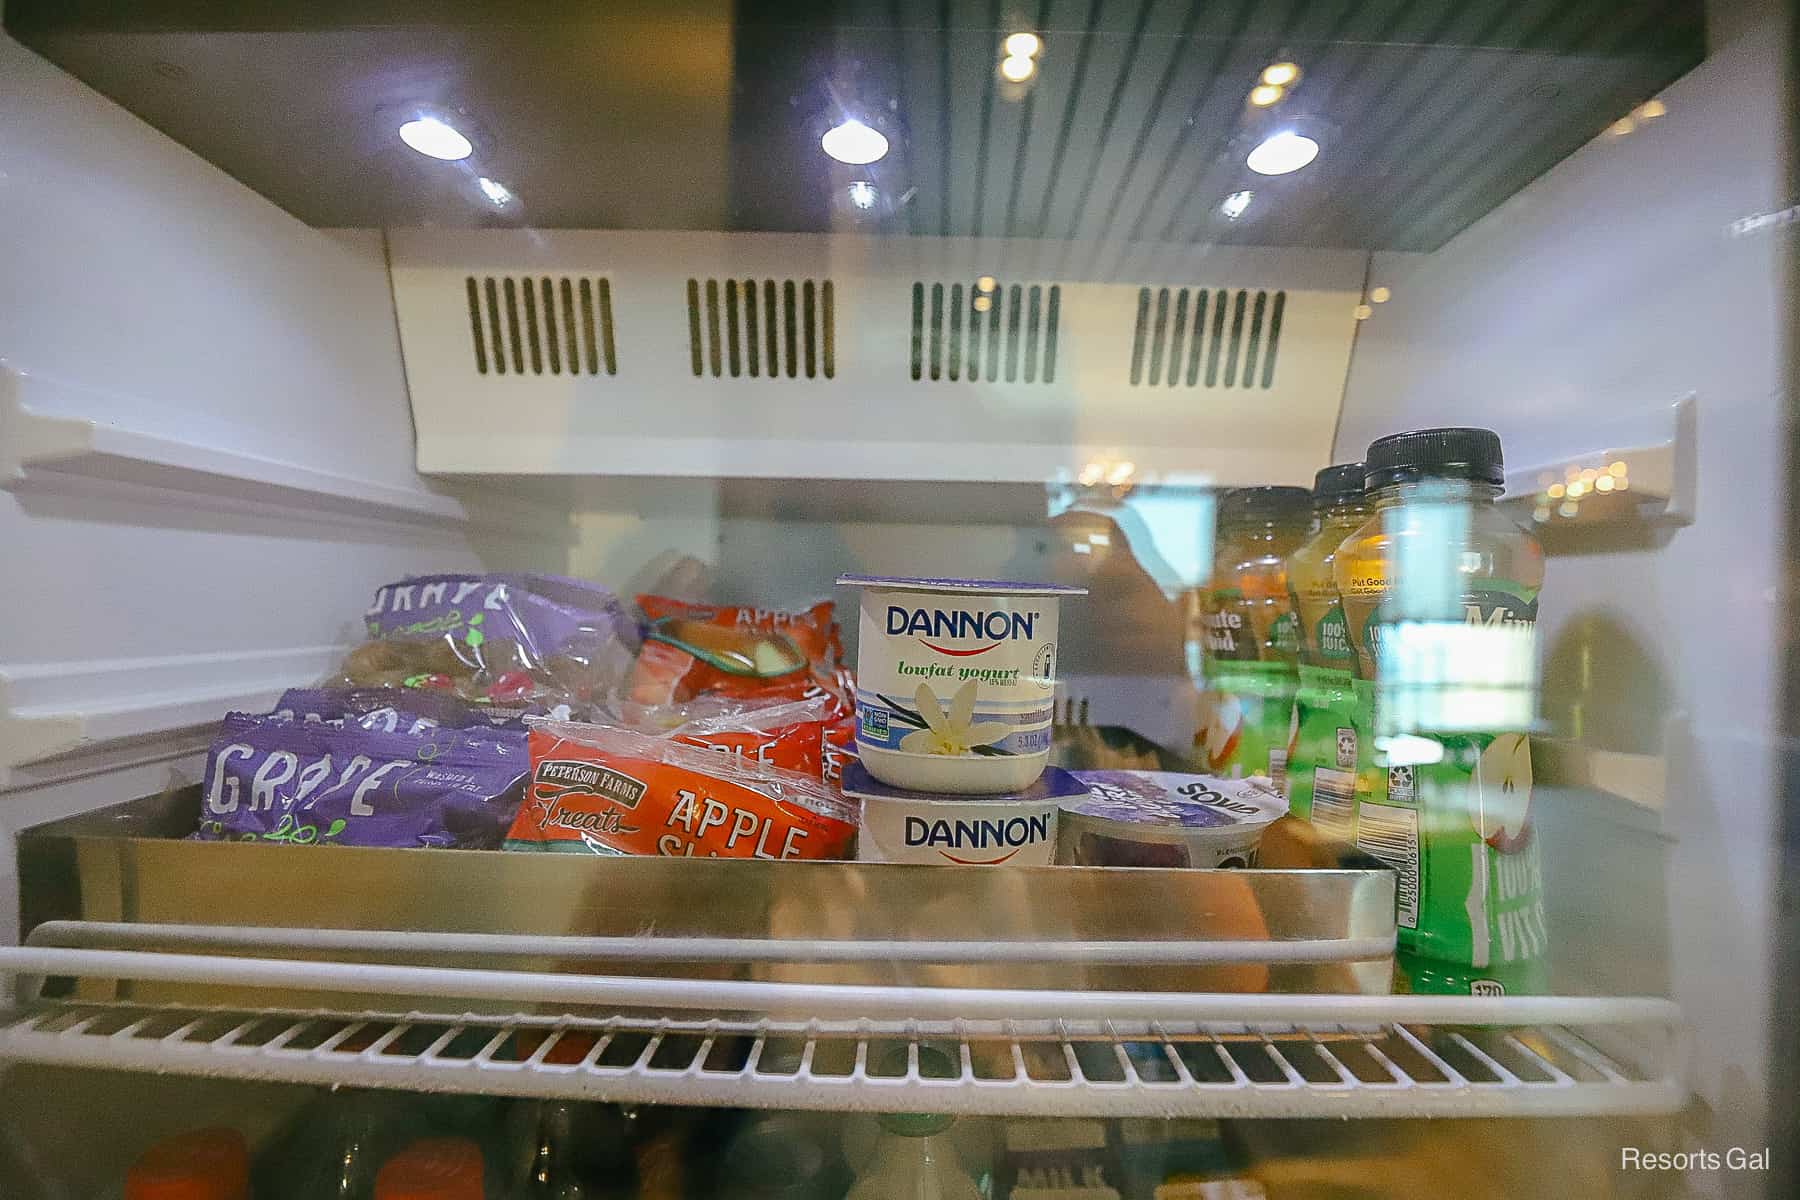 items in the fridge like bags of grapes, apple slices, yogurt and apple juice